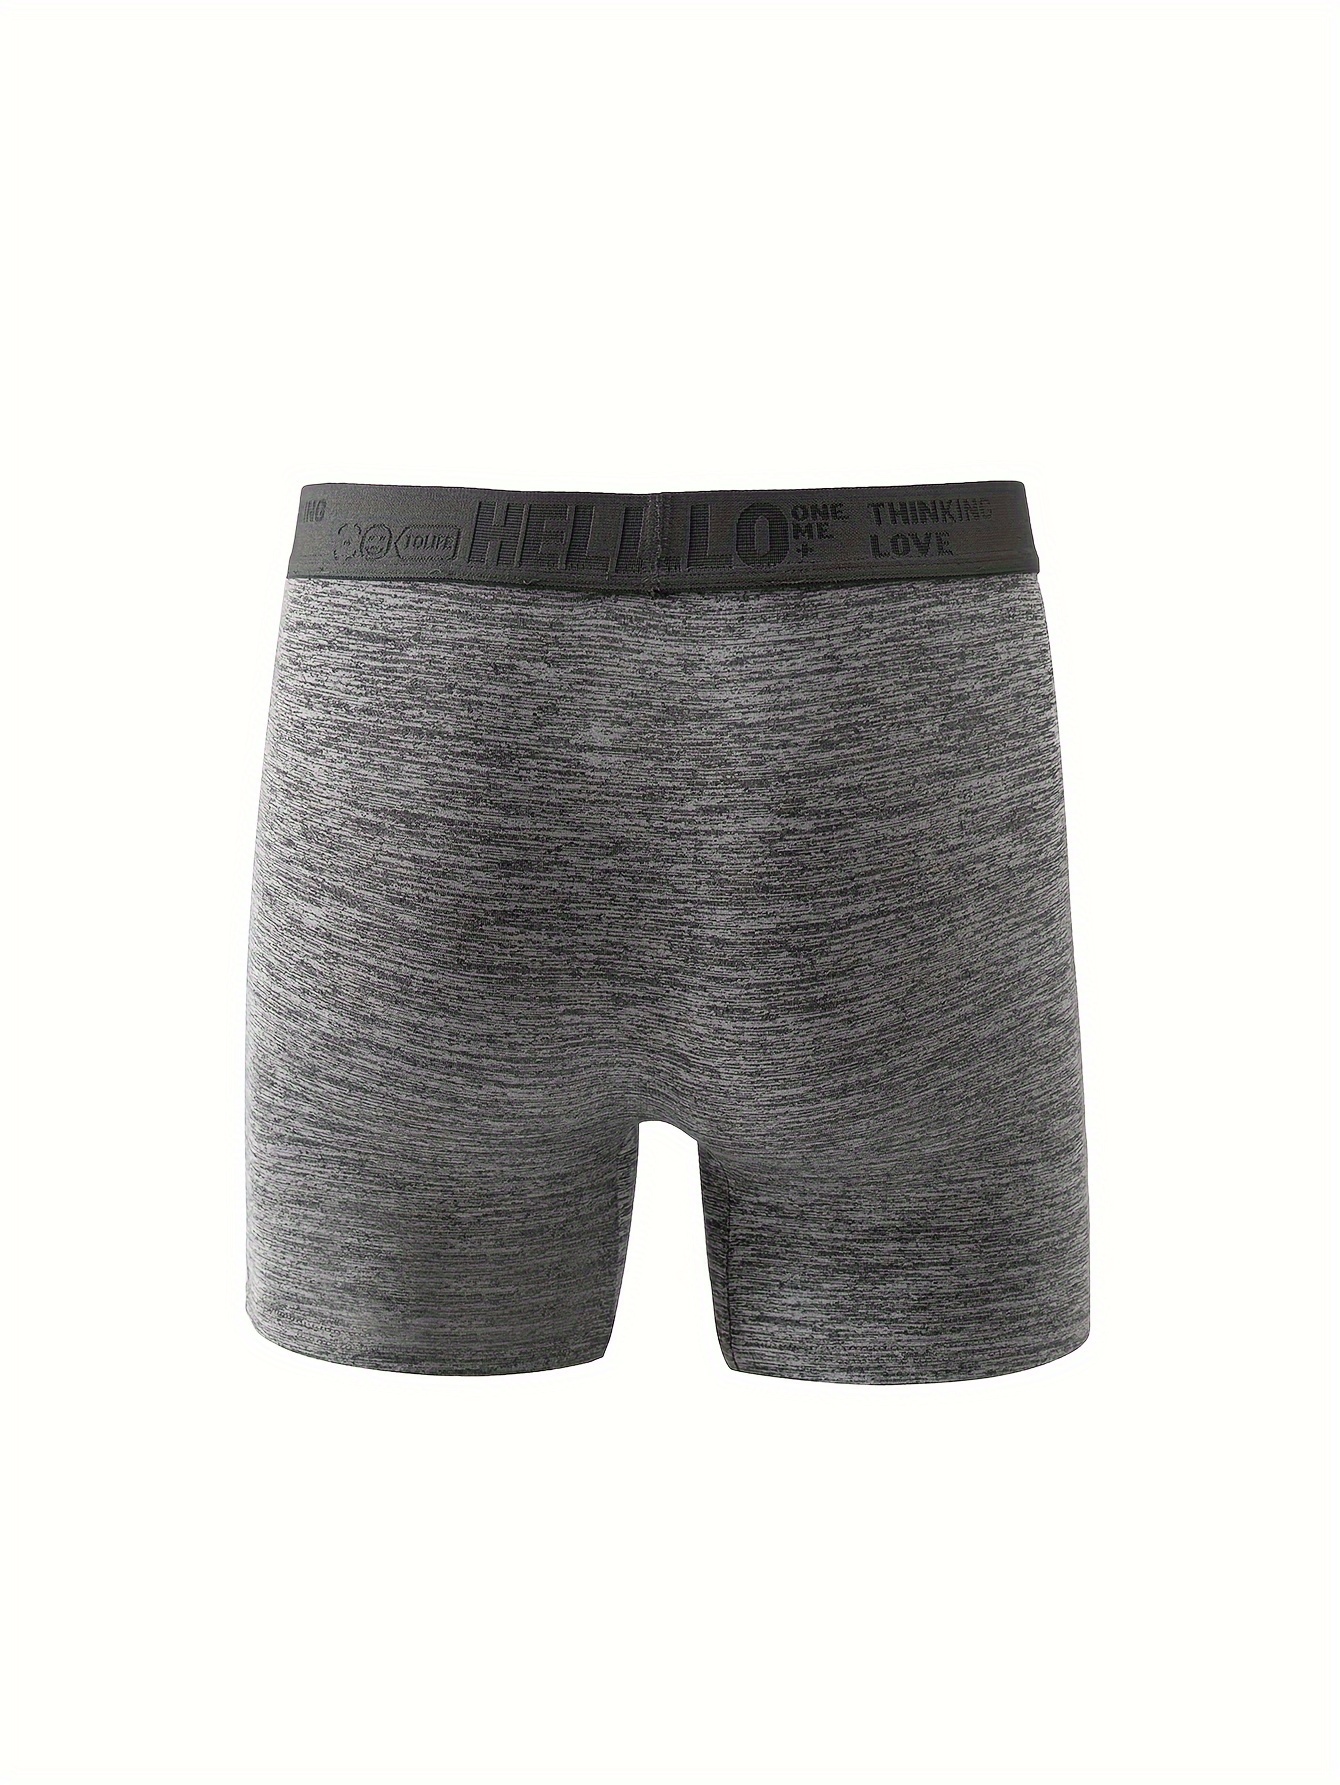 3pcs mens boxer briefs sightly stretch breathable comfortable sport underwear details 7